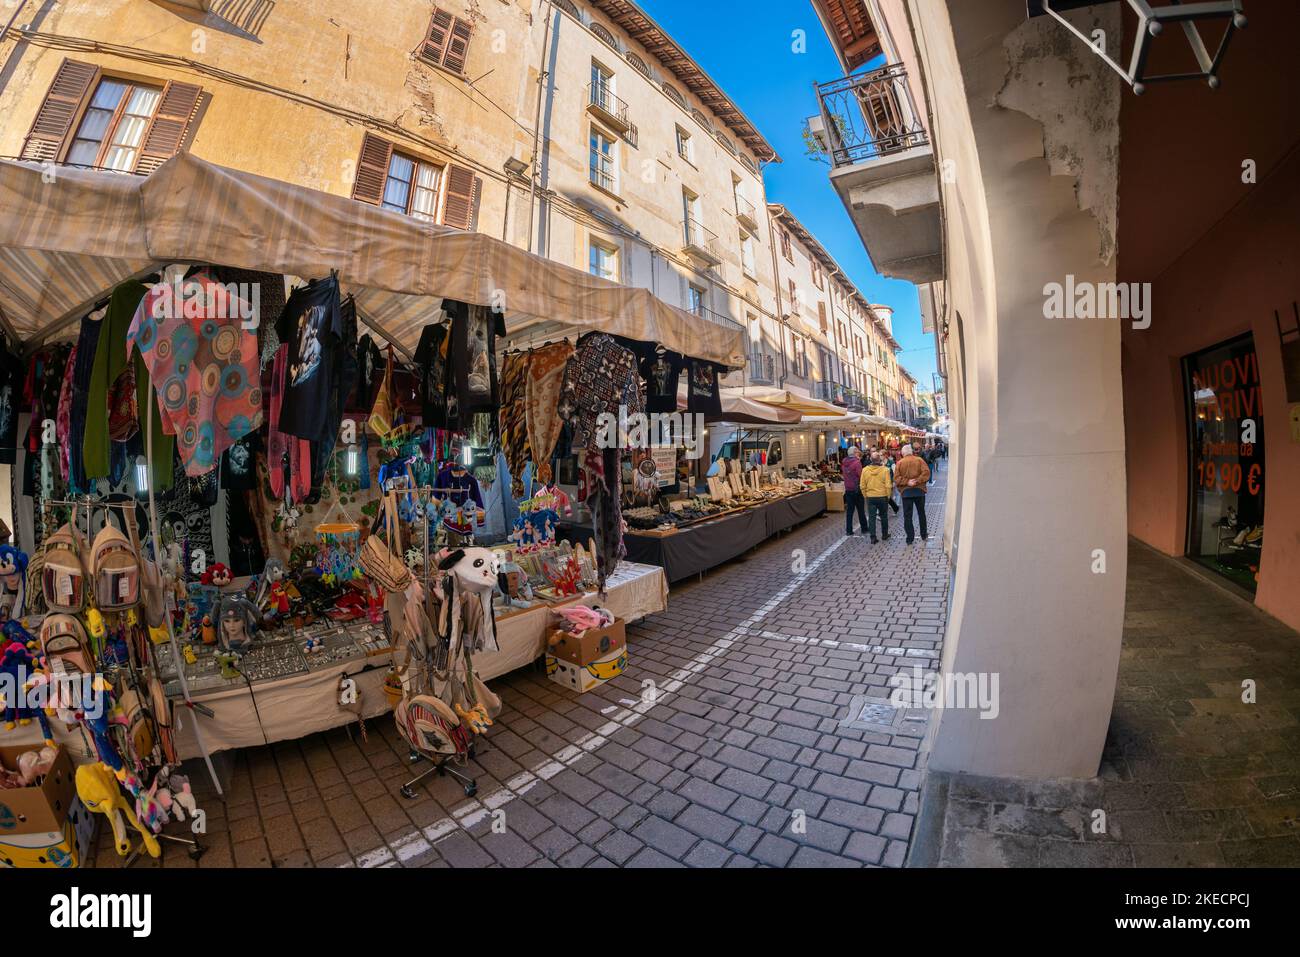 Carmagnola, Turin, Italy - November 05, 2022: Saturday market stalls in via Ferruccio Valobra, central street with arcades in the historic center Stock Photo